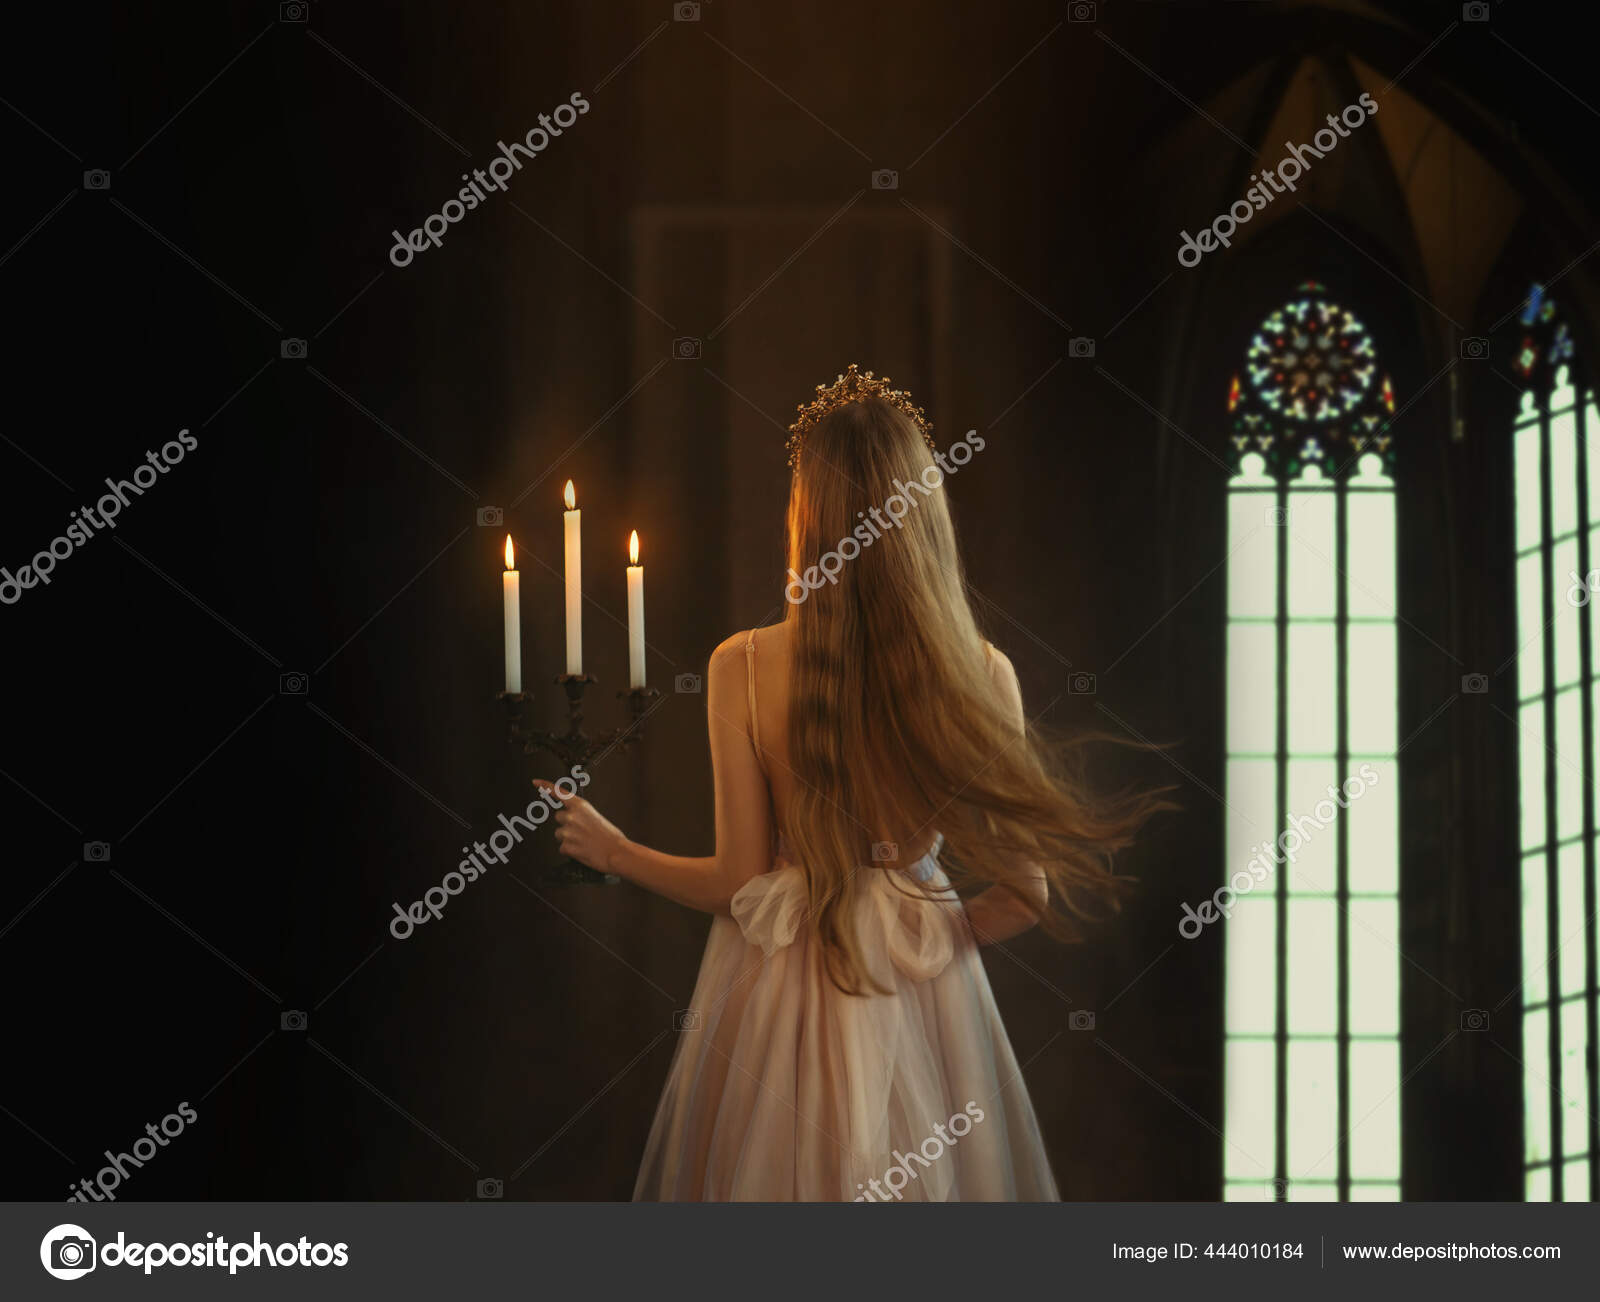 Mysterious art medieval girl princess walks in dark gothic room